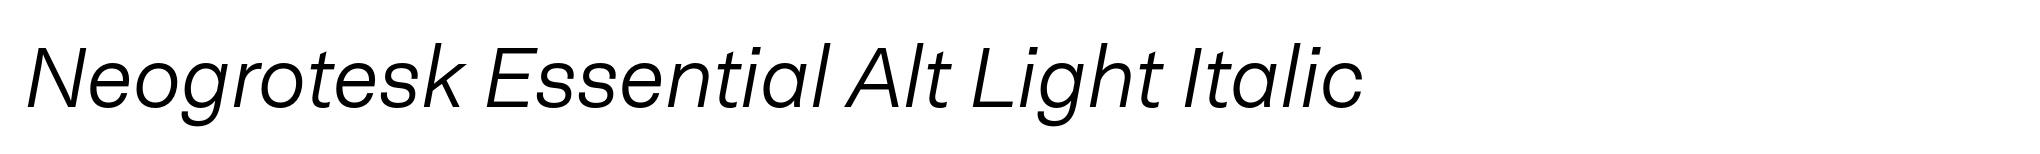 Neogrotesk Essential Alt Light Italic image